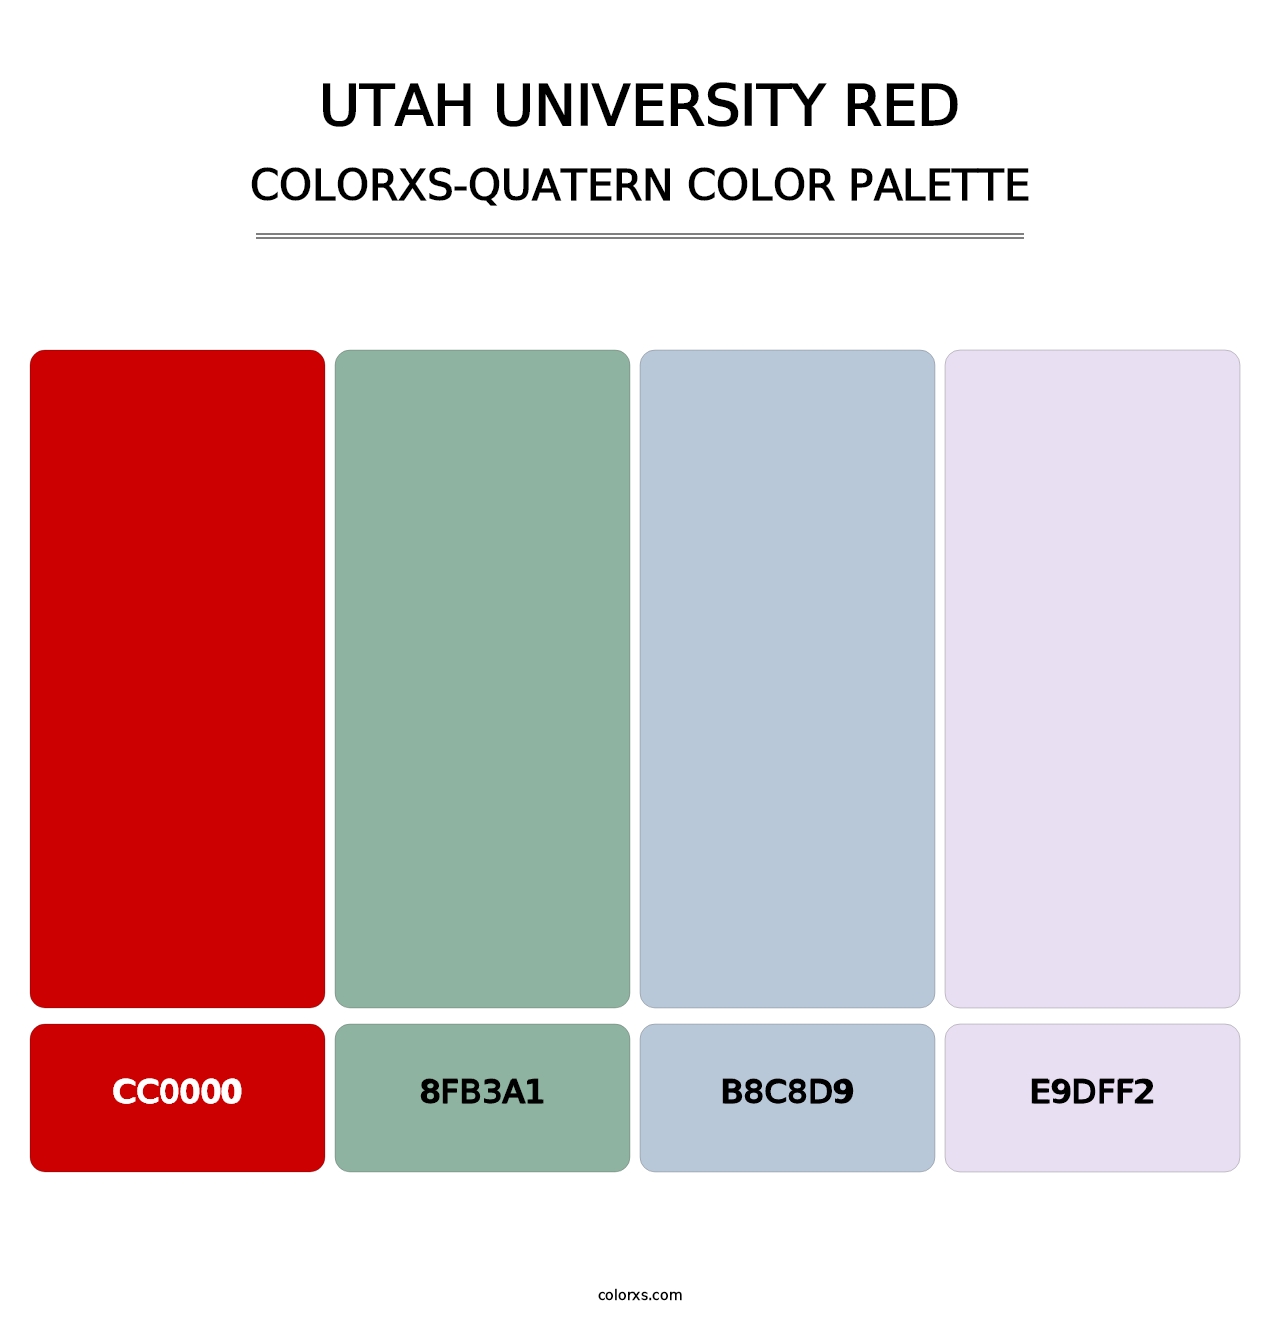 Utah University Red - Colorxs Quatern Palette